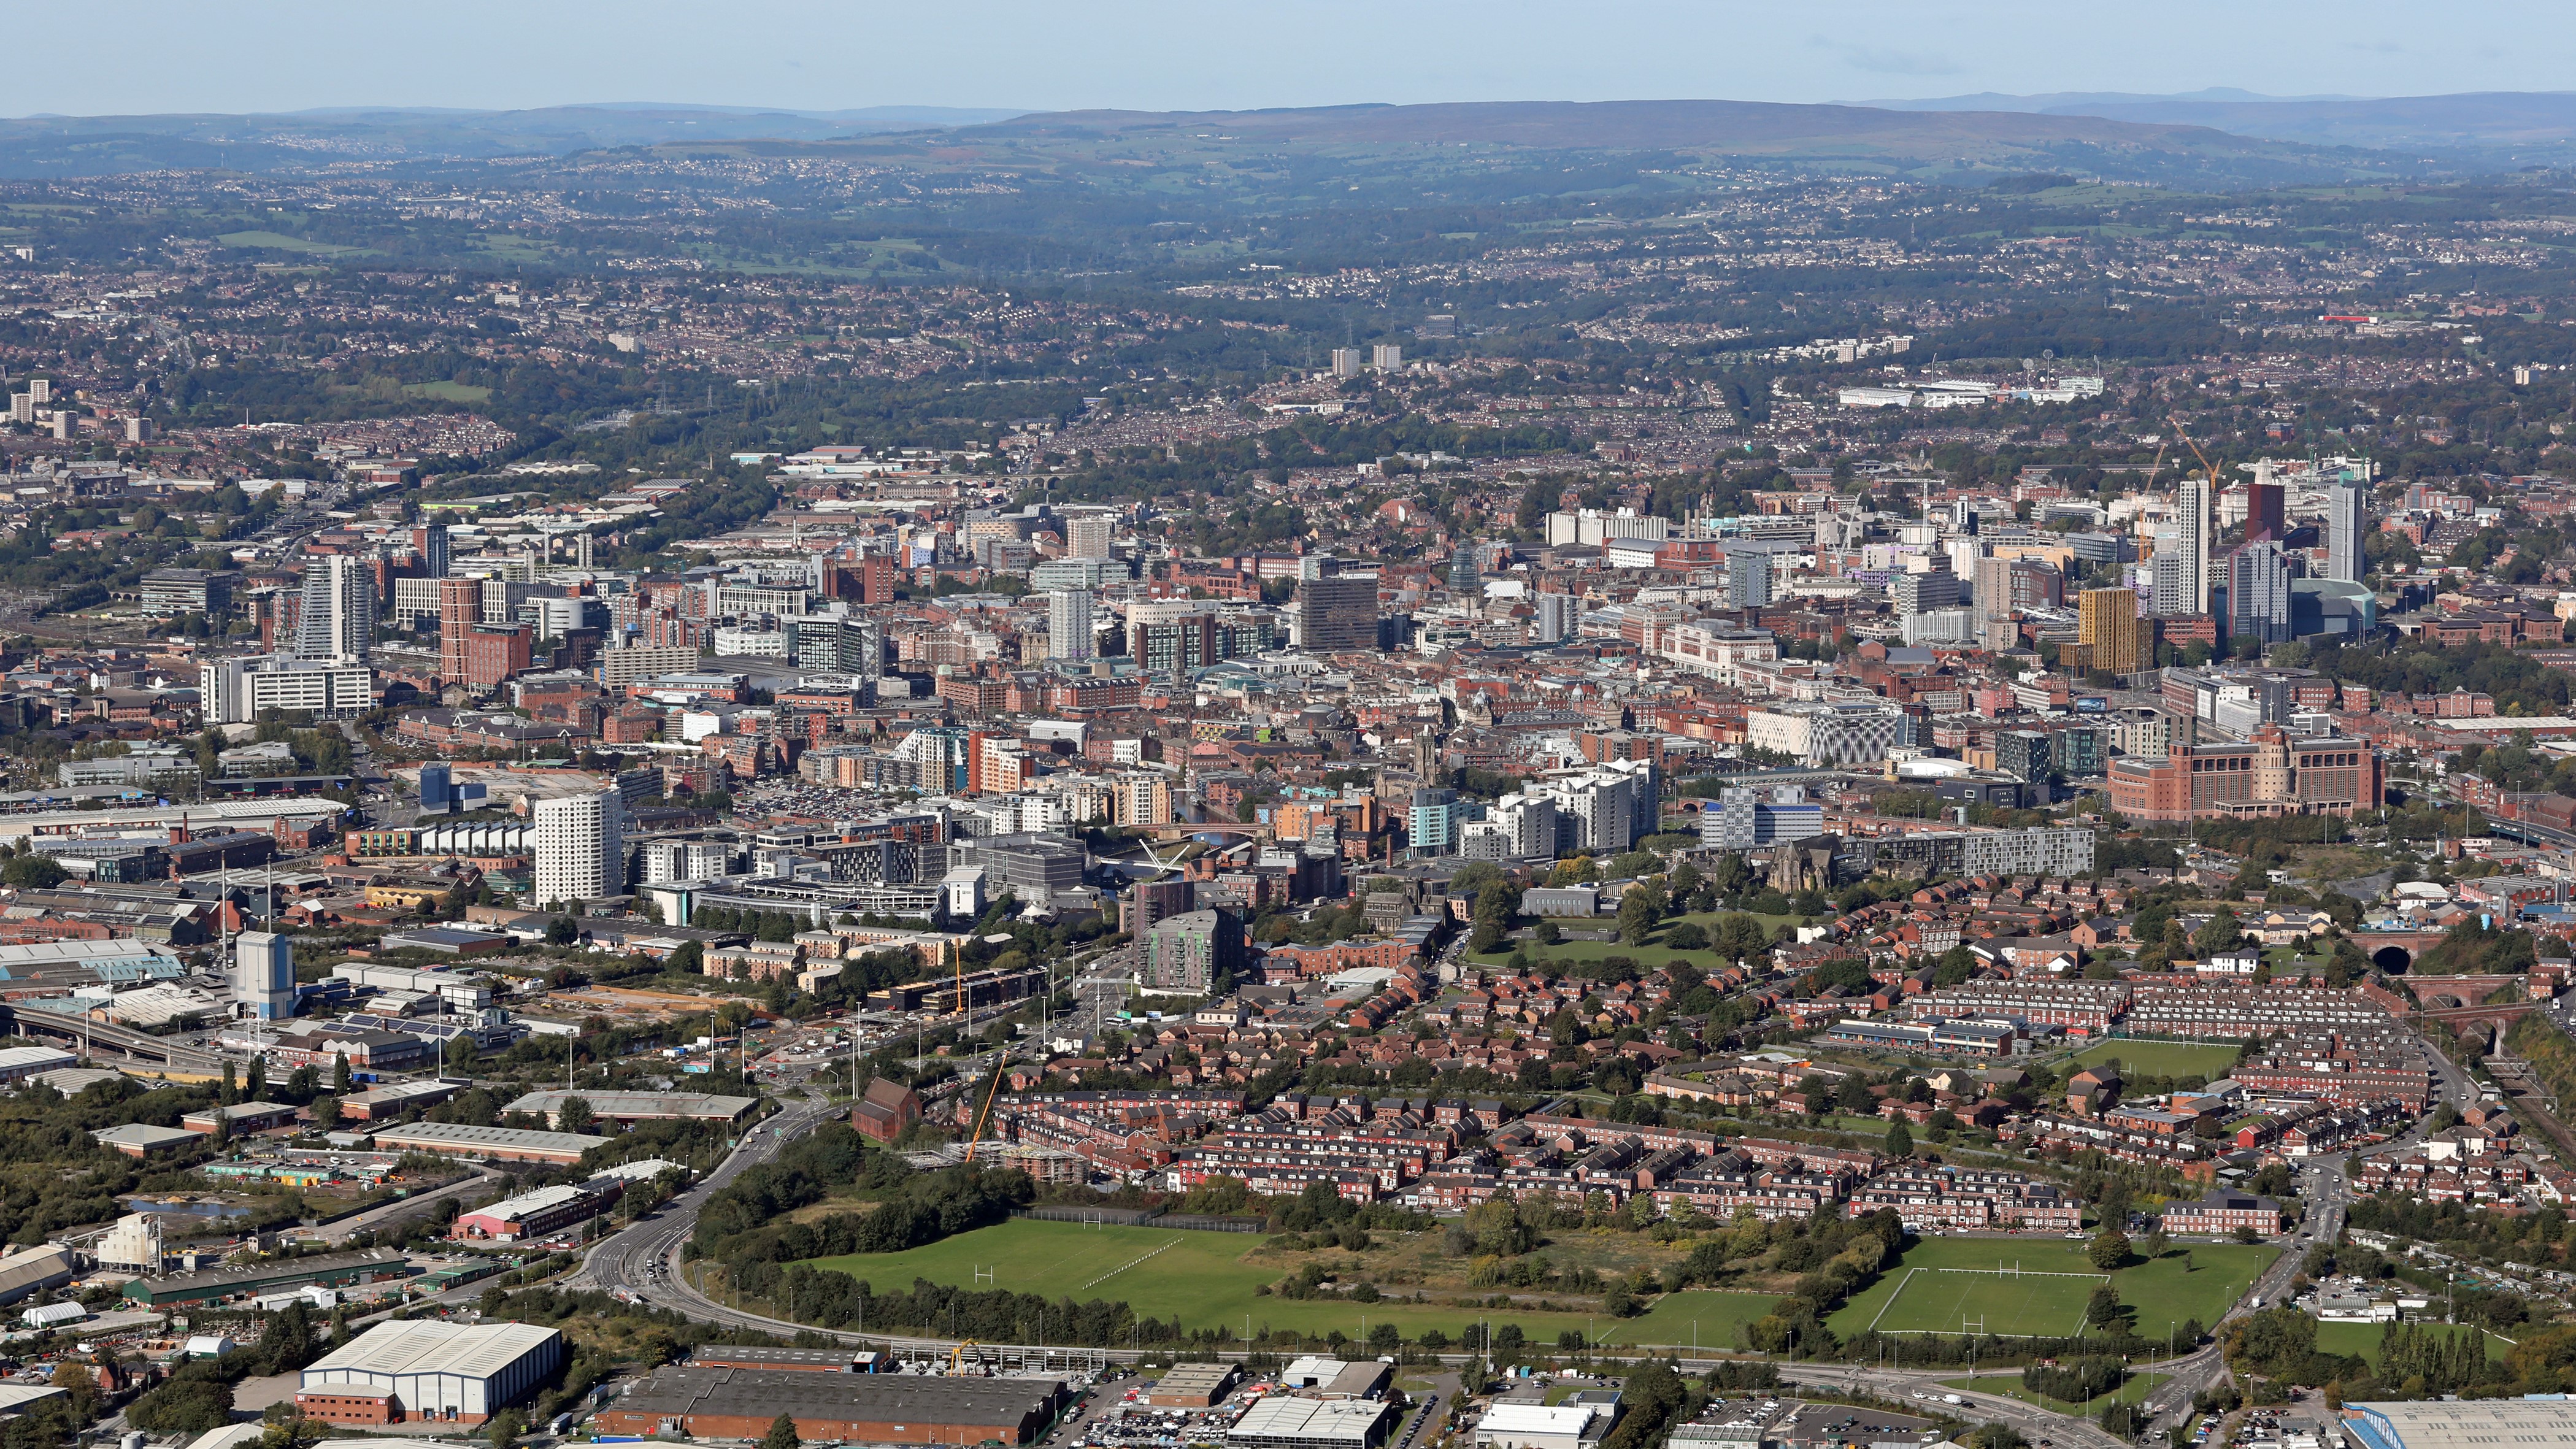 Aerial view of Leeds city centre